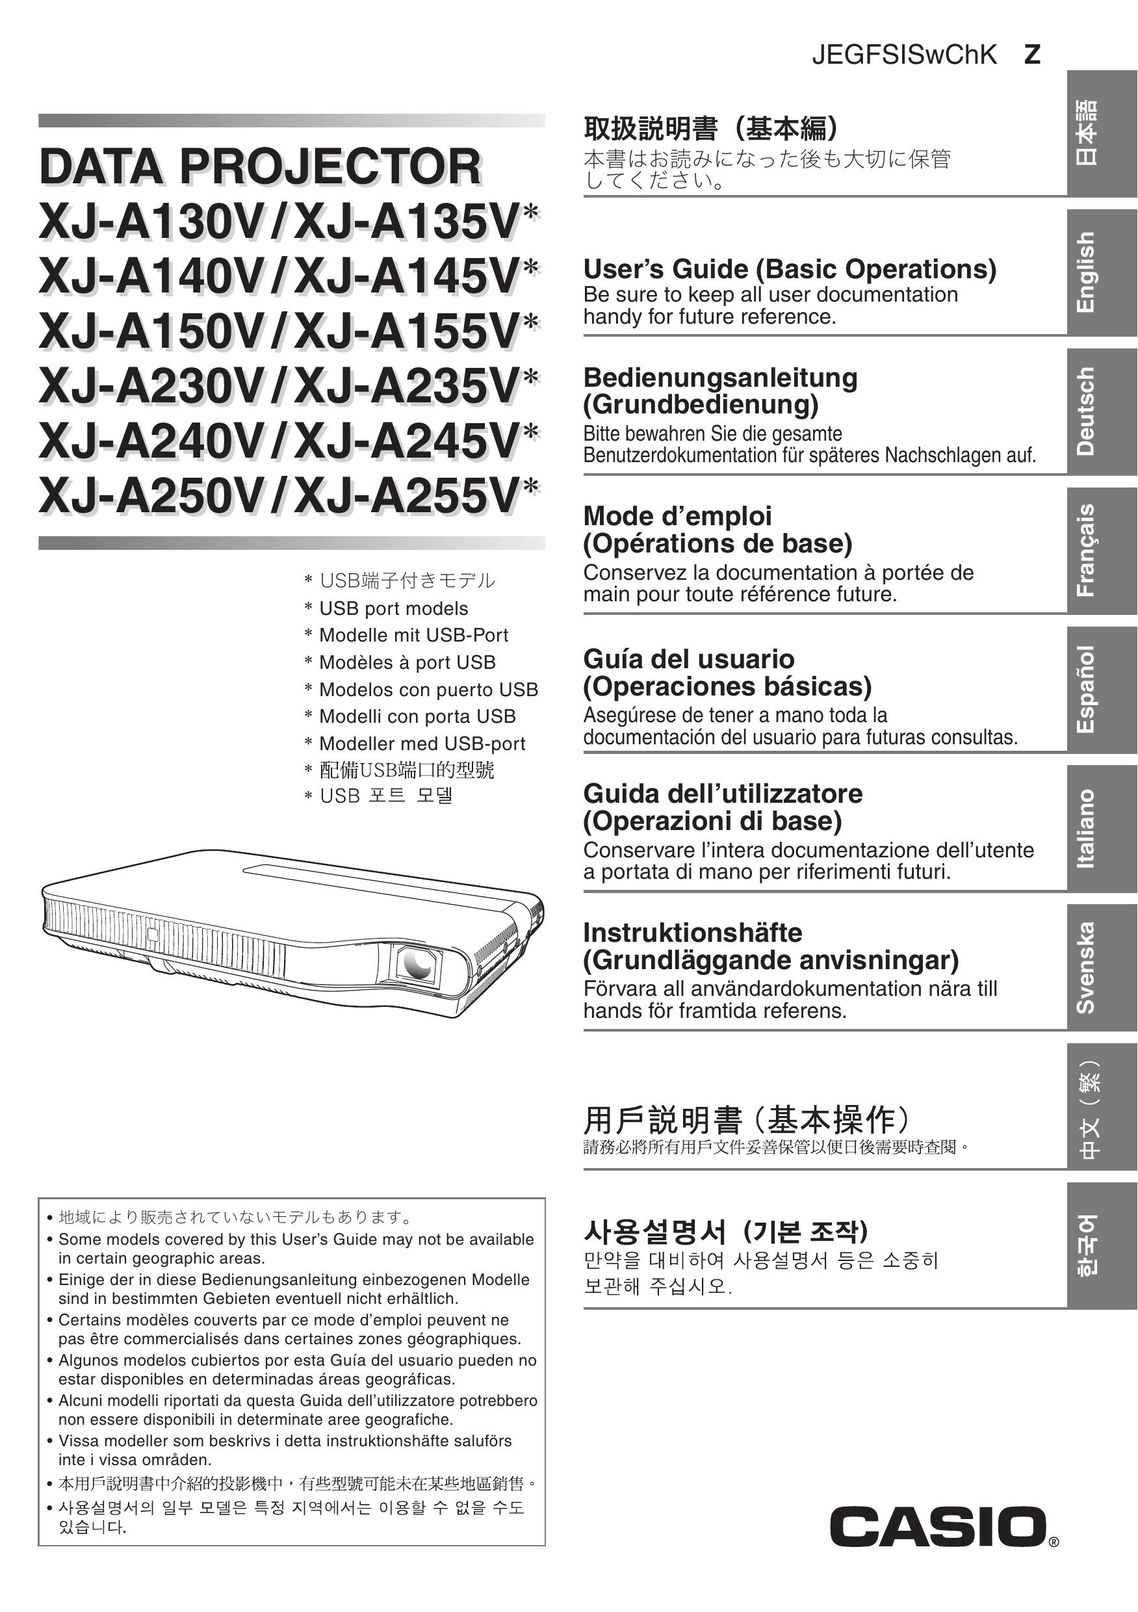 Casio XJ-A150V/XJ-A155V* Projector User Manual